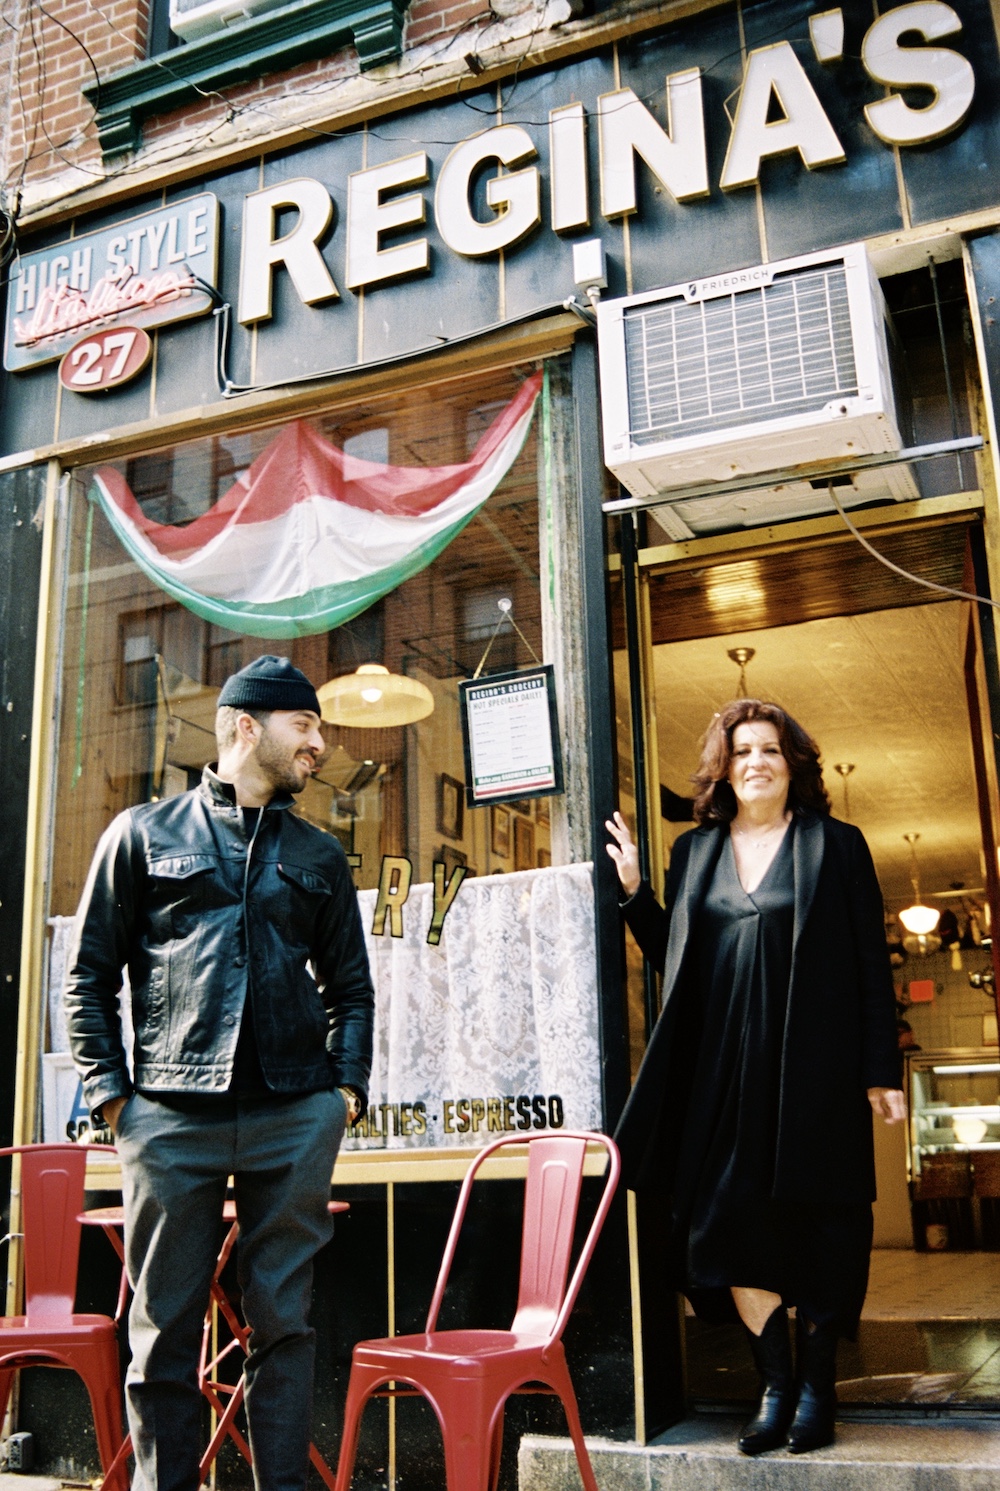  Roman and Regina Grandinetti pose outside Regina's Grocery on Orchard St.